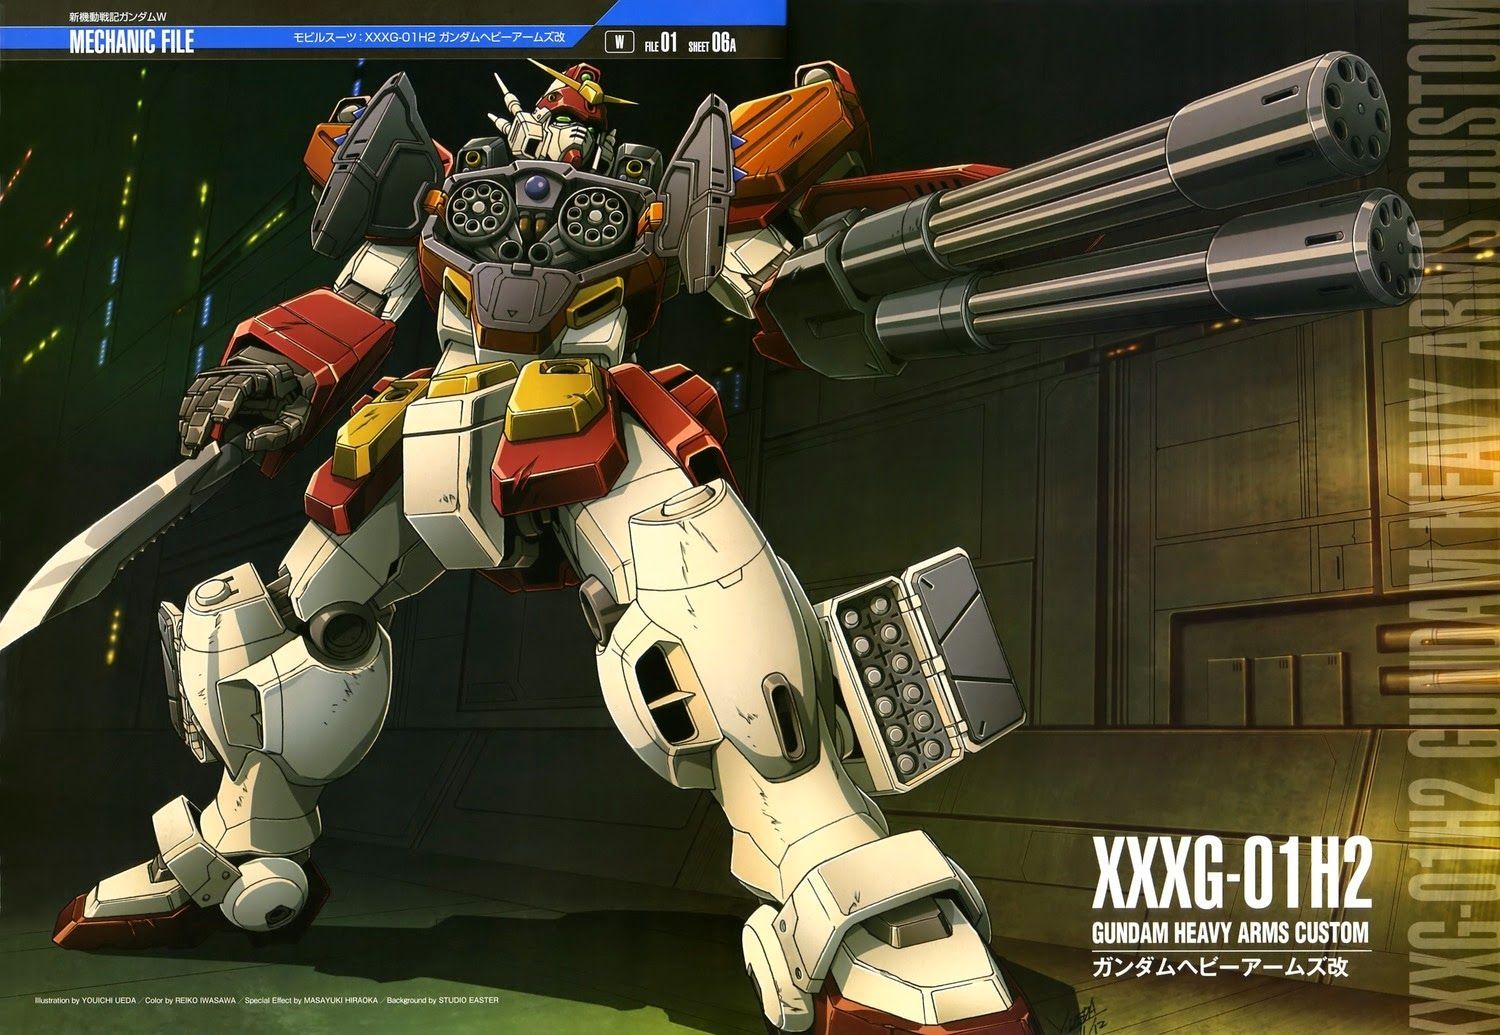 Mobile Suit Gundam Mechanic File Quality Image Gallery